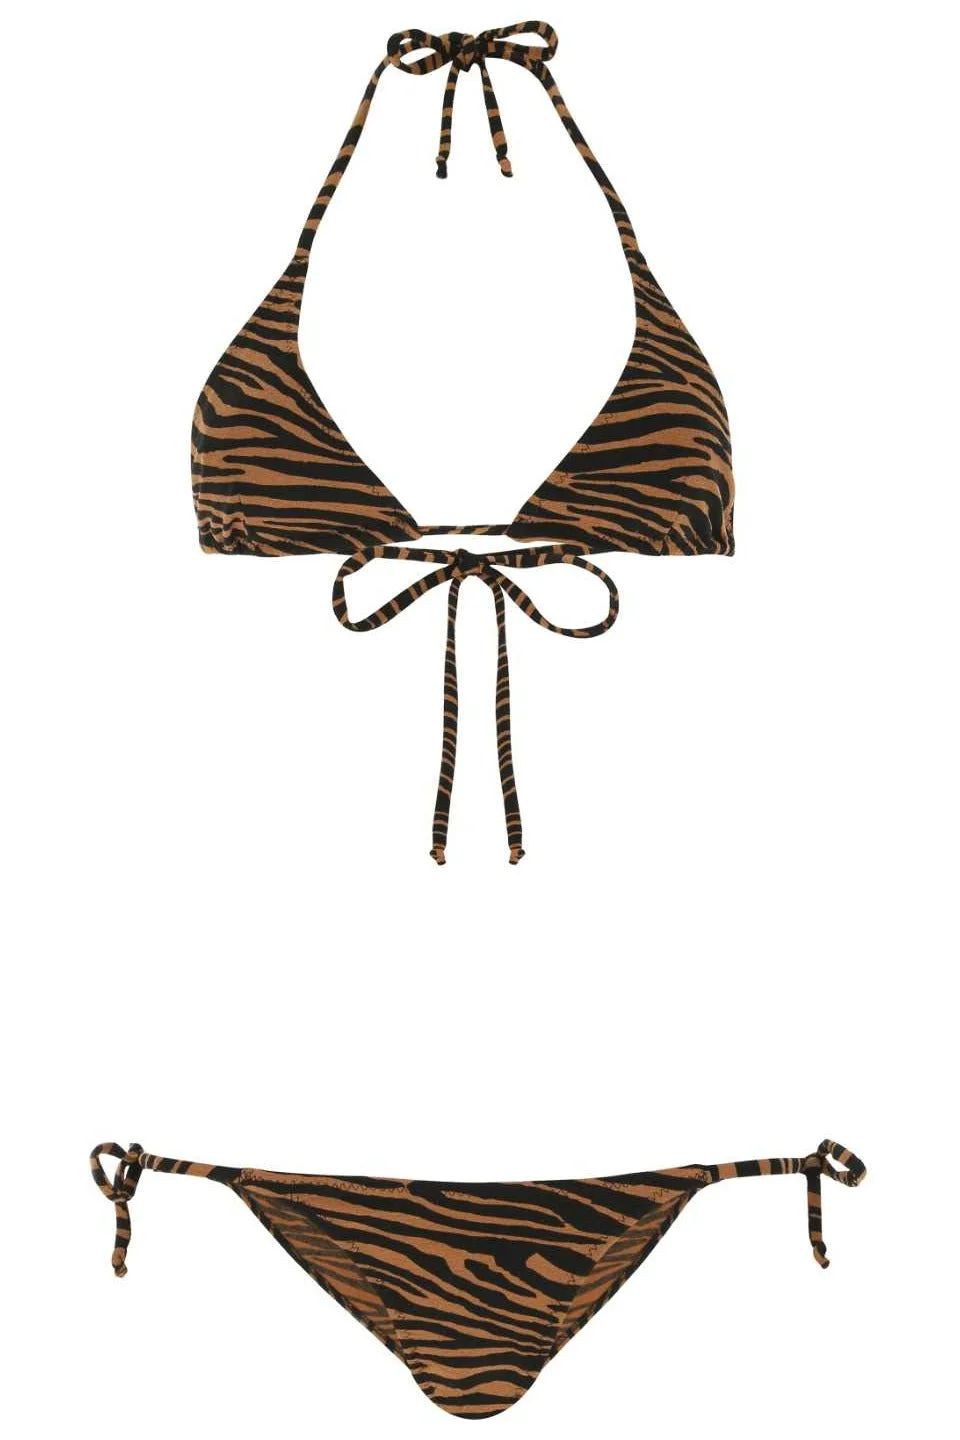 Lisa Marie Fernandez Zebra Print Two-Piece Bikini Set | Cettire Global